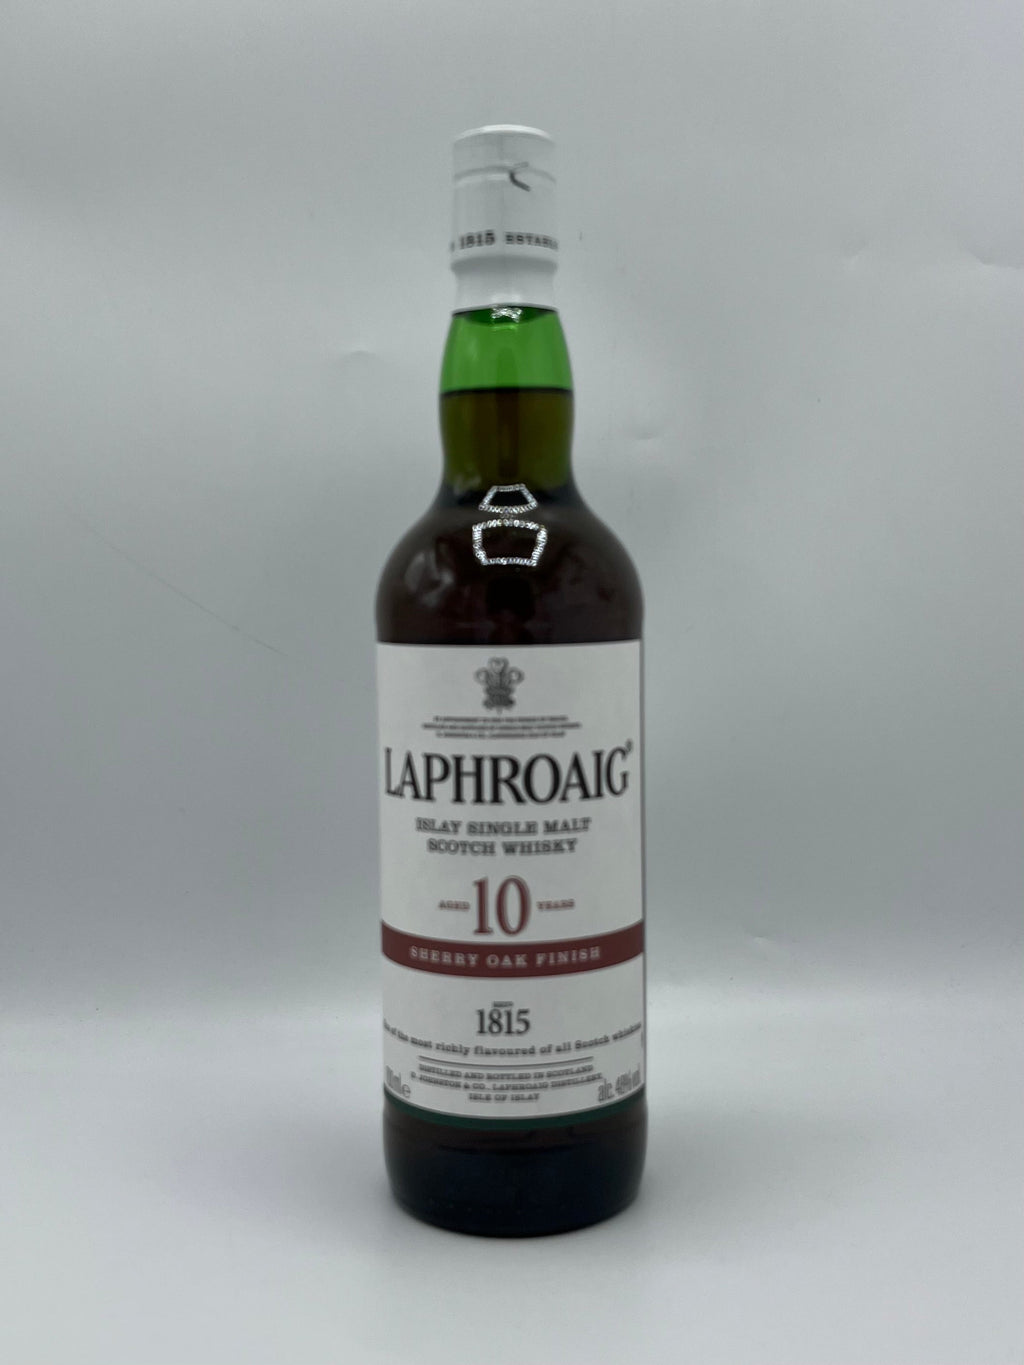 Laphroaig 10Ans "Sherry Oak Finish" - Islay Single Malt Scotch Whisky